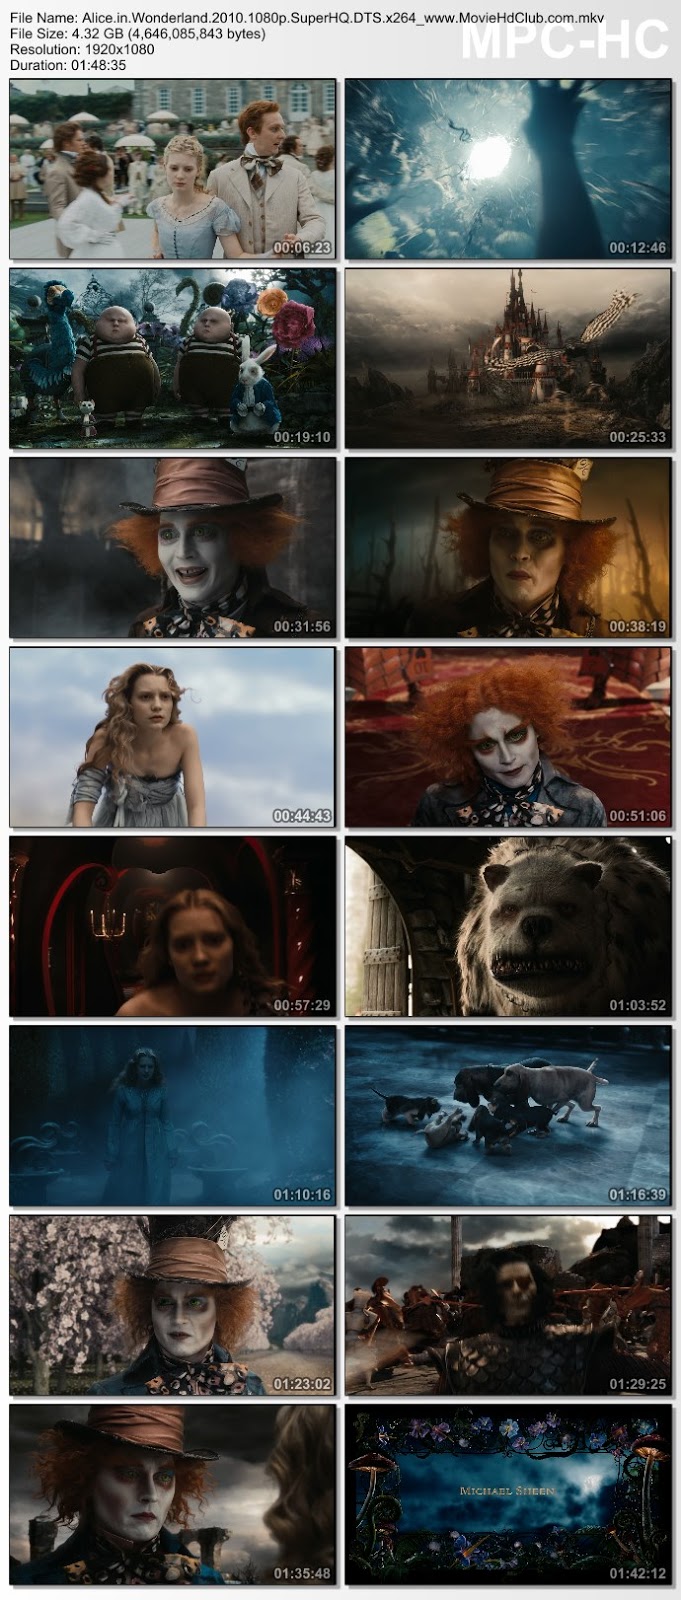 [Mini-HD] Alice in Wonderland (2010) - อลิซผจญแดนมหัศจรรย์ [1080p][เสียง:ไทย 5.1/Eng DTS][ซับ:ไทย/Eng][.MKV][4.33GB] AW_MovieHdClub_SS